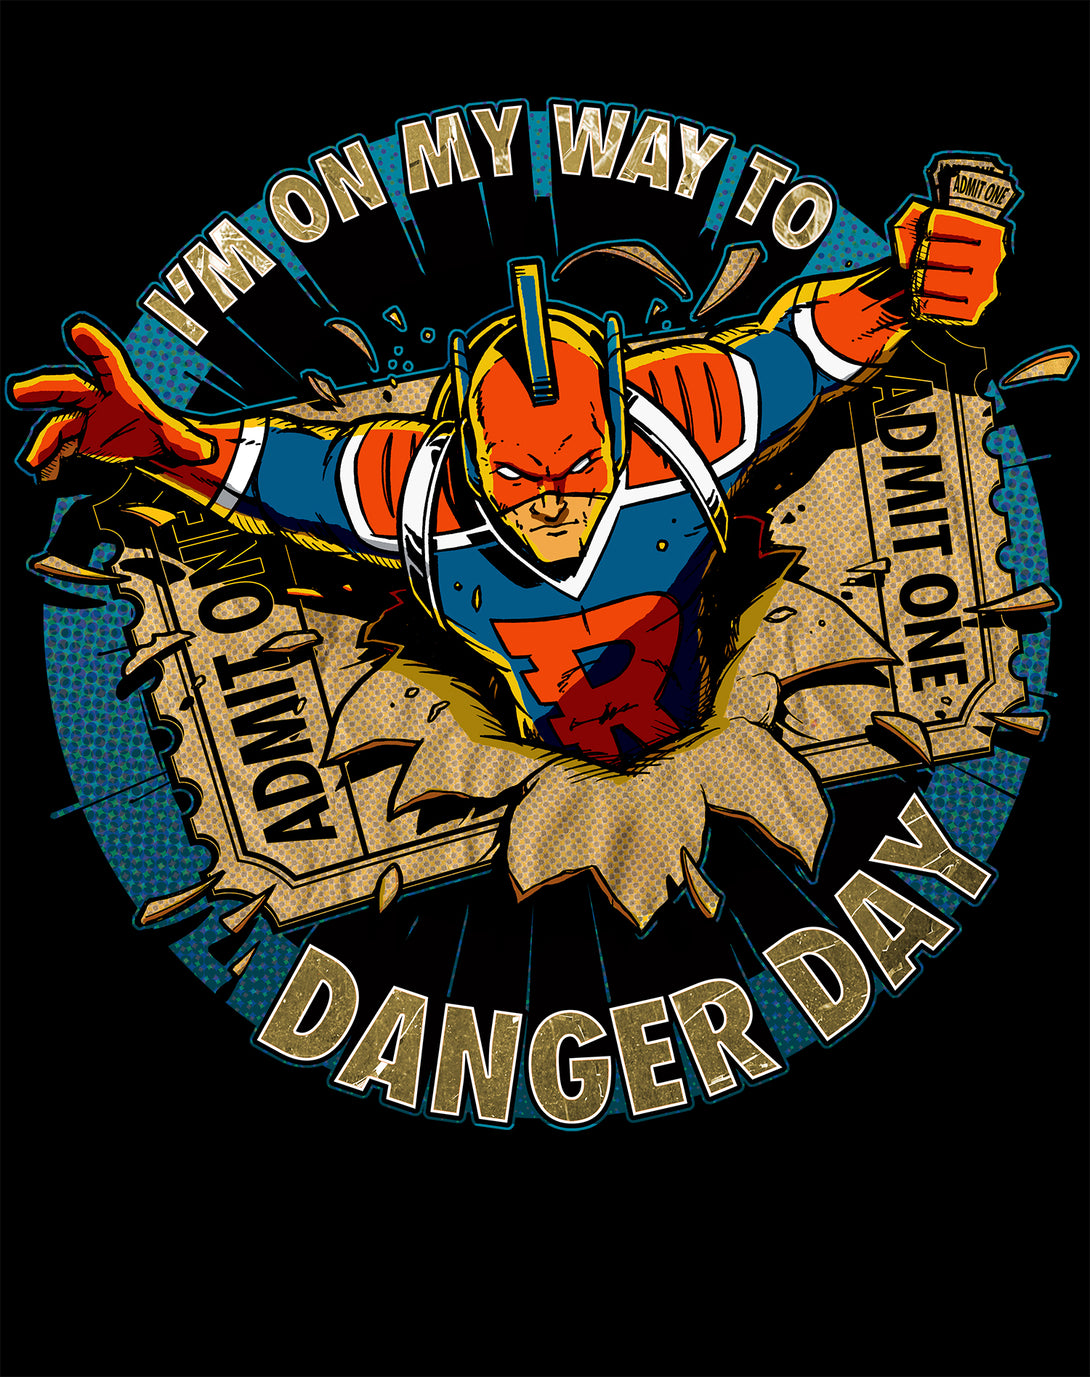 Kevin Smith View Askewniverse Danger Days Logo LDN Edition Official Sweatshirt Black - Urban Species Design Close Up